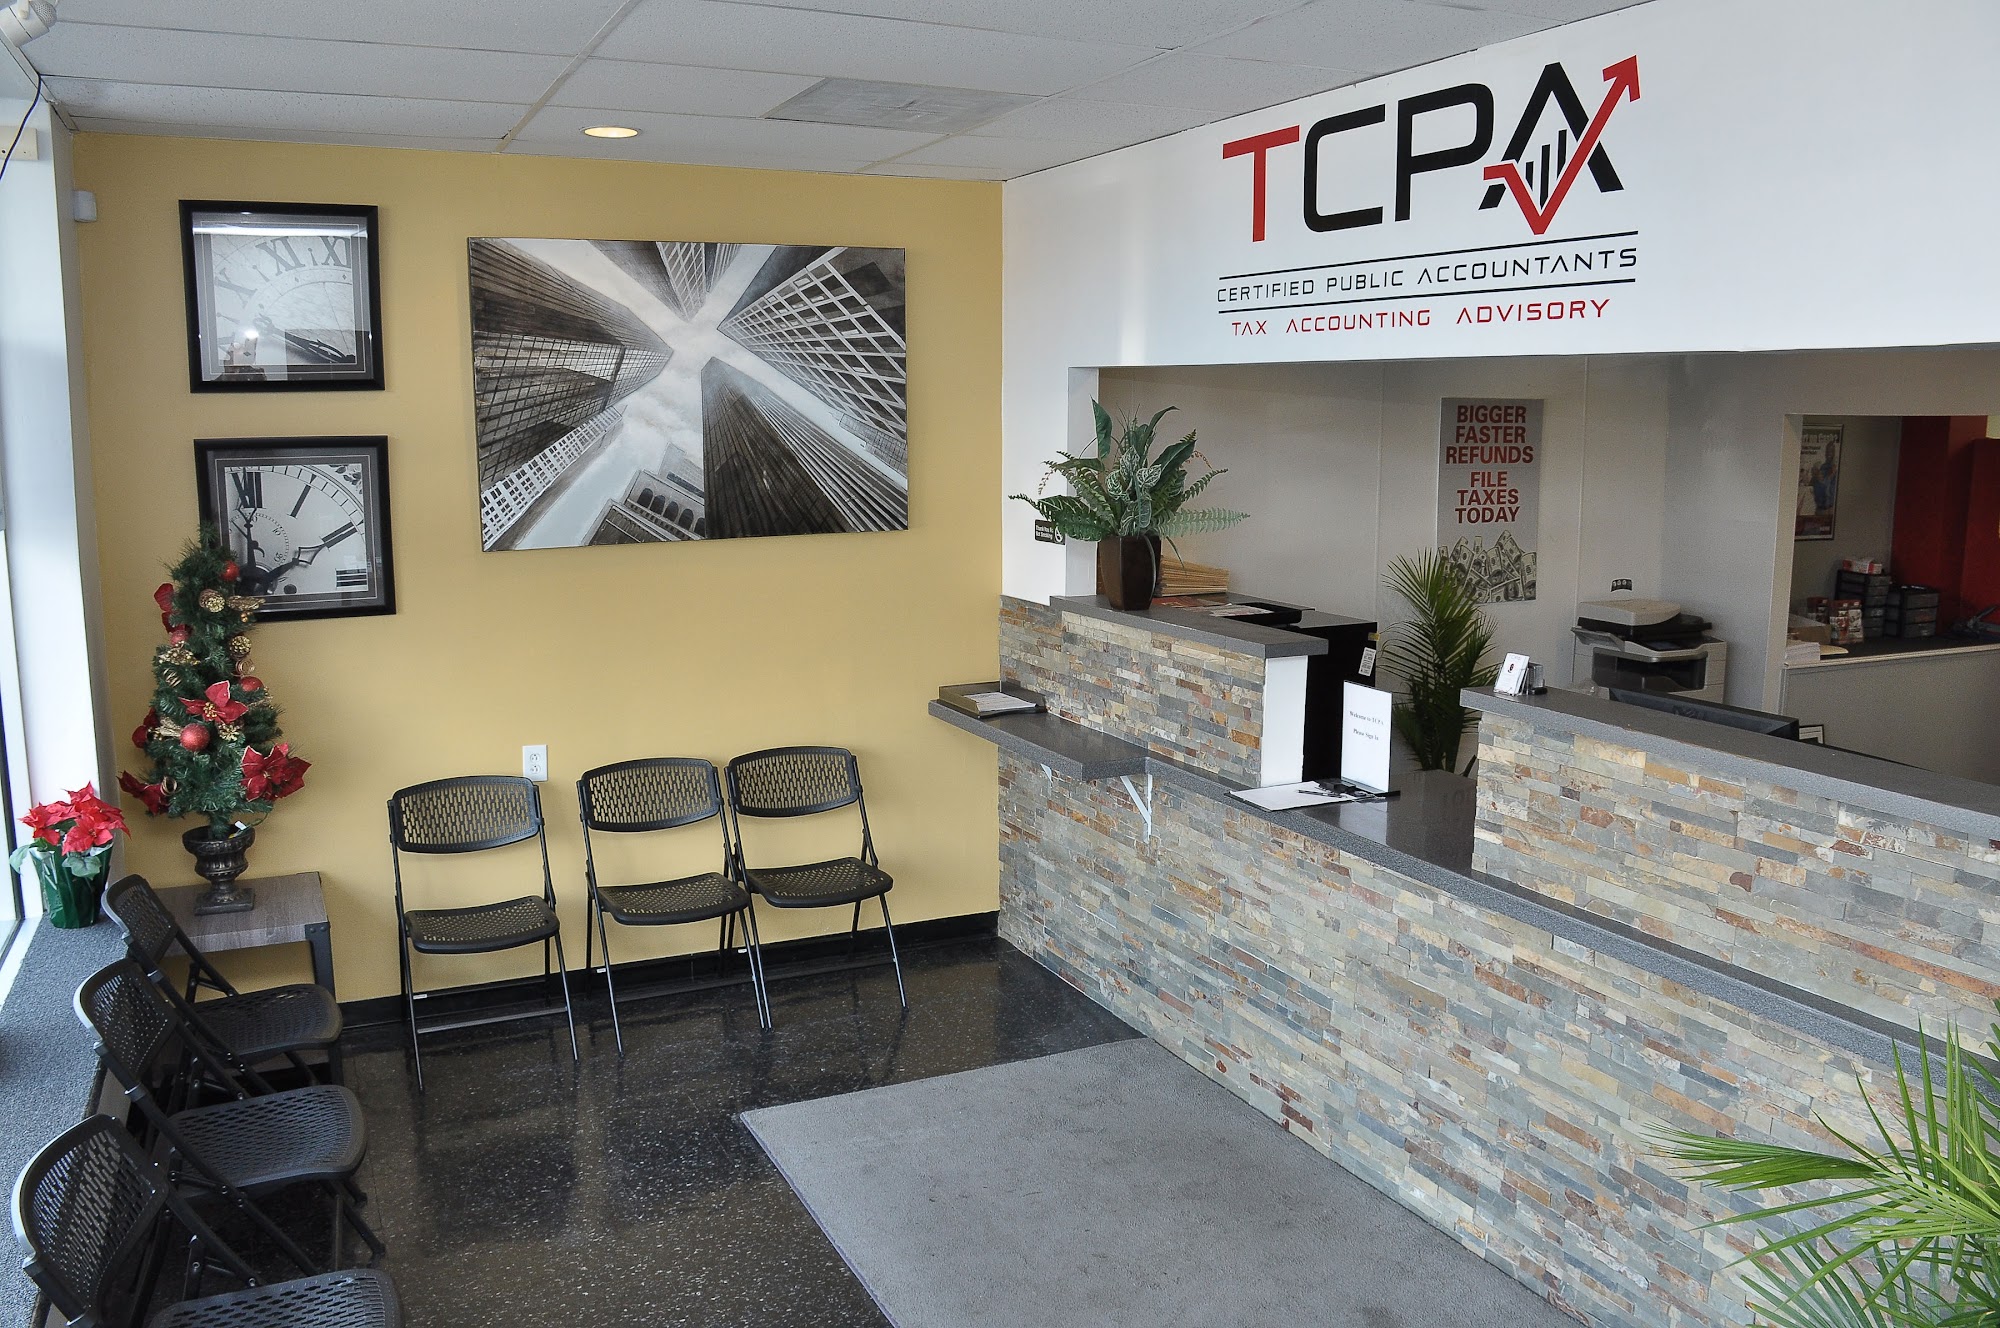 TCPA - Certified Public Accountants